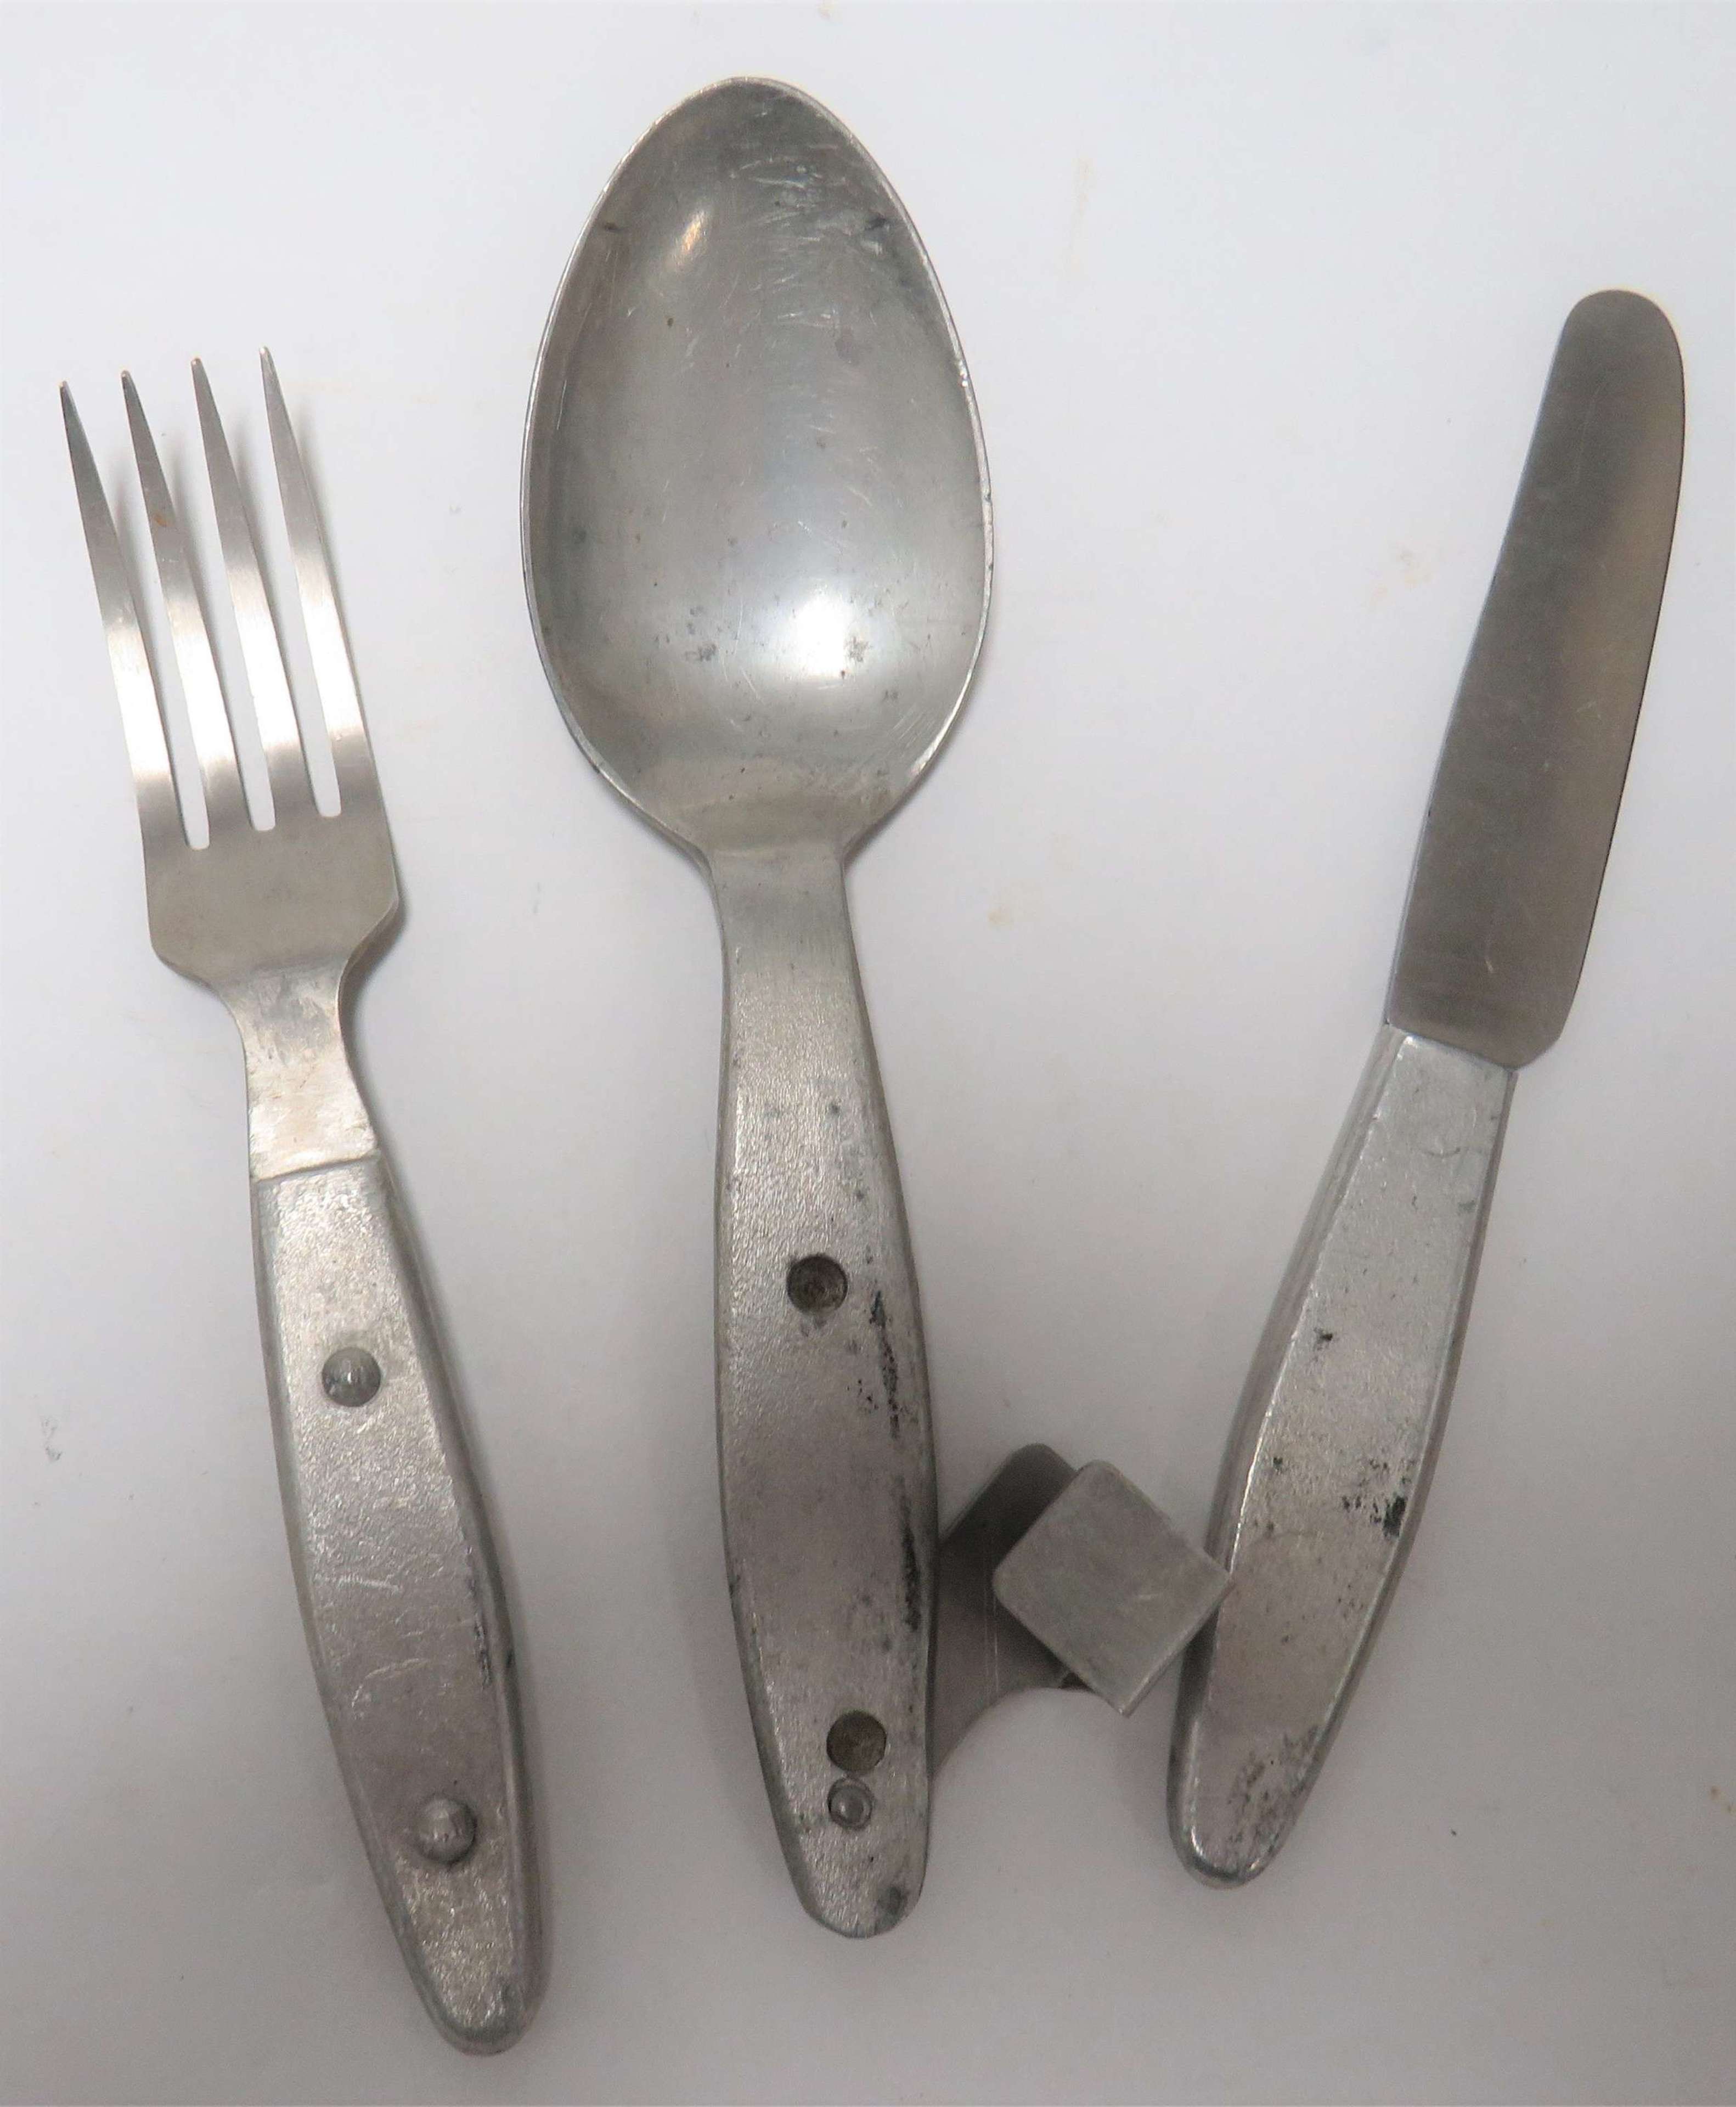 1945 Dated British Issue Cutlery Set